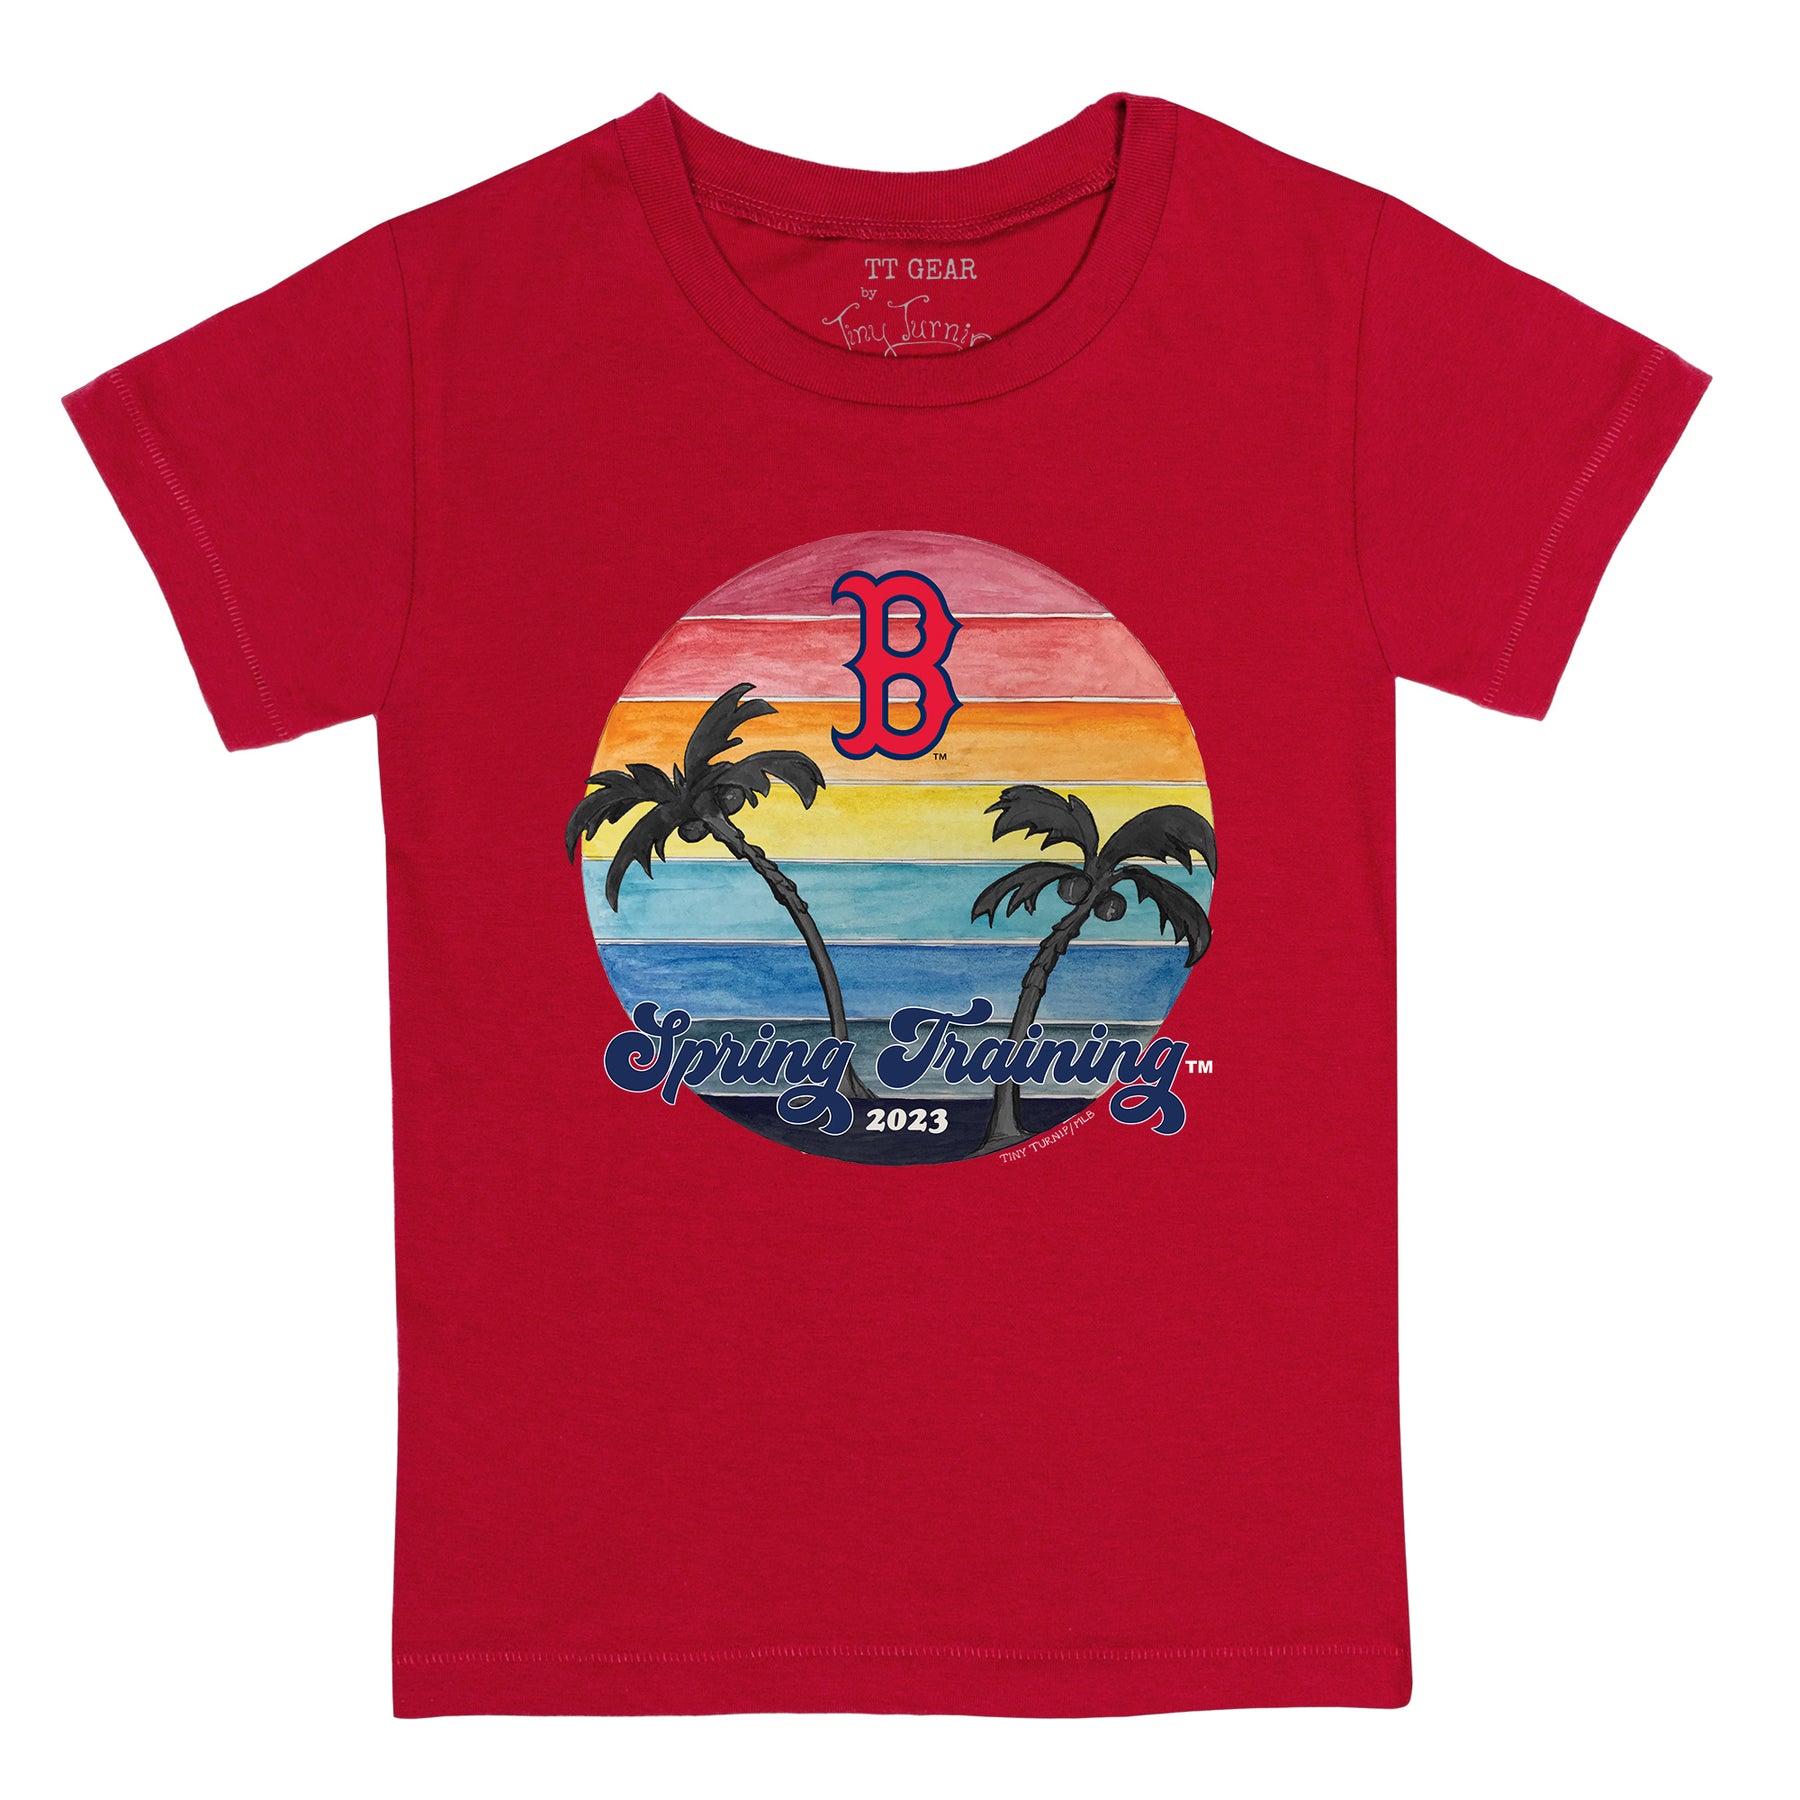 Tiny Turnip Boston Red Sox Girl Teddy Tee Shirt Women's XL / Red